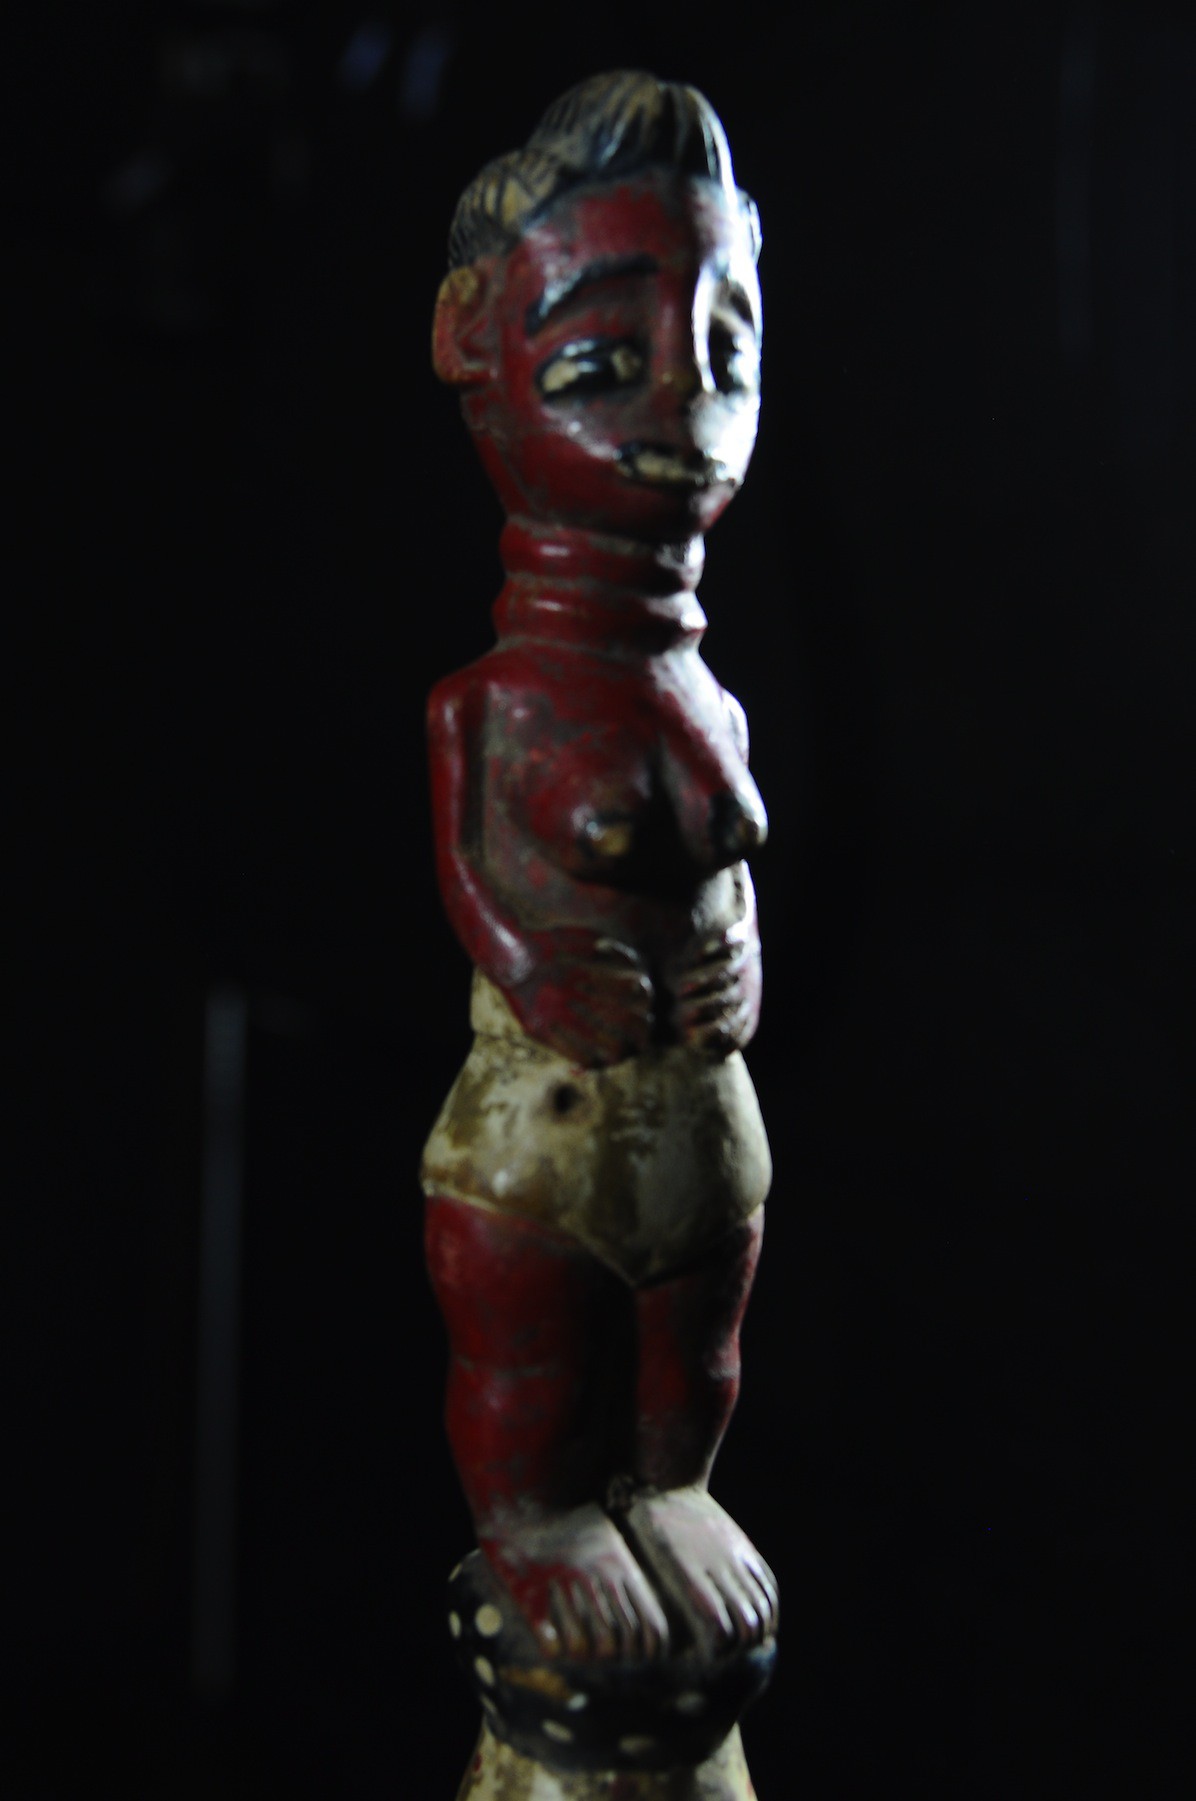 Baton de danse polychrome - Ewe - Togo - Objets de regalia - Objet n°1394 -  Galerie Bruno Mignot